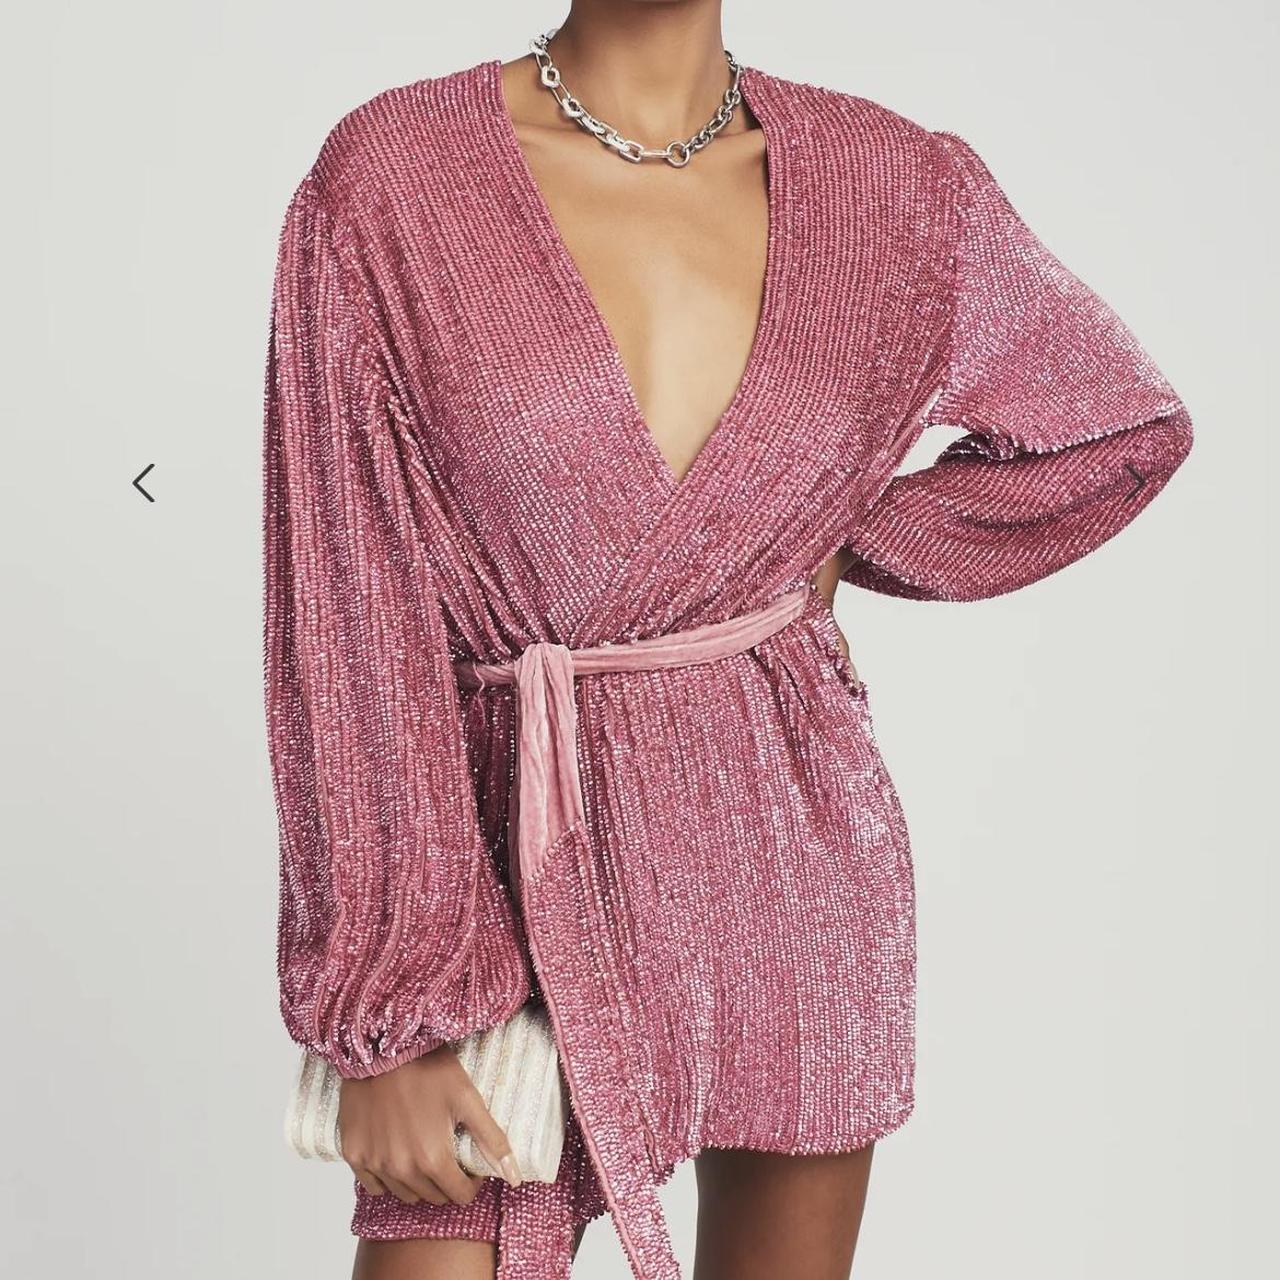 Gabrielle Robe Dress for sale. Pink colour (first... - Depop